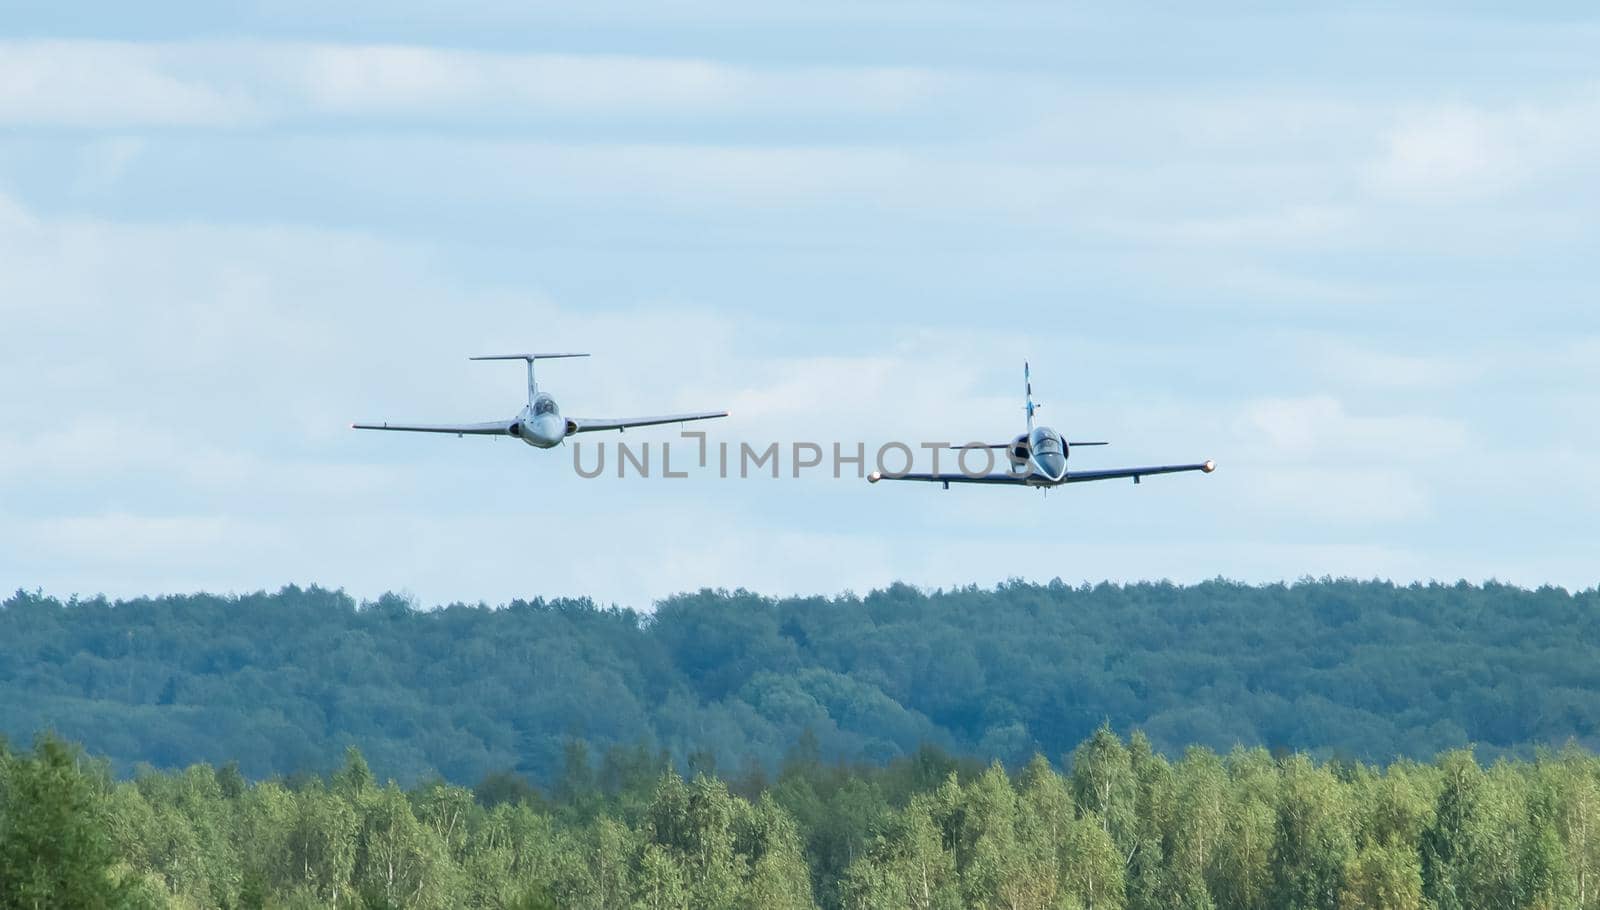 September 12, 2020, Kaluga region, Russia. Training aircraft Aero L-39 Albatros and Aero L-29 Delfin perform a training flight at the Oreshkovo airfield.